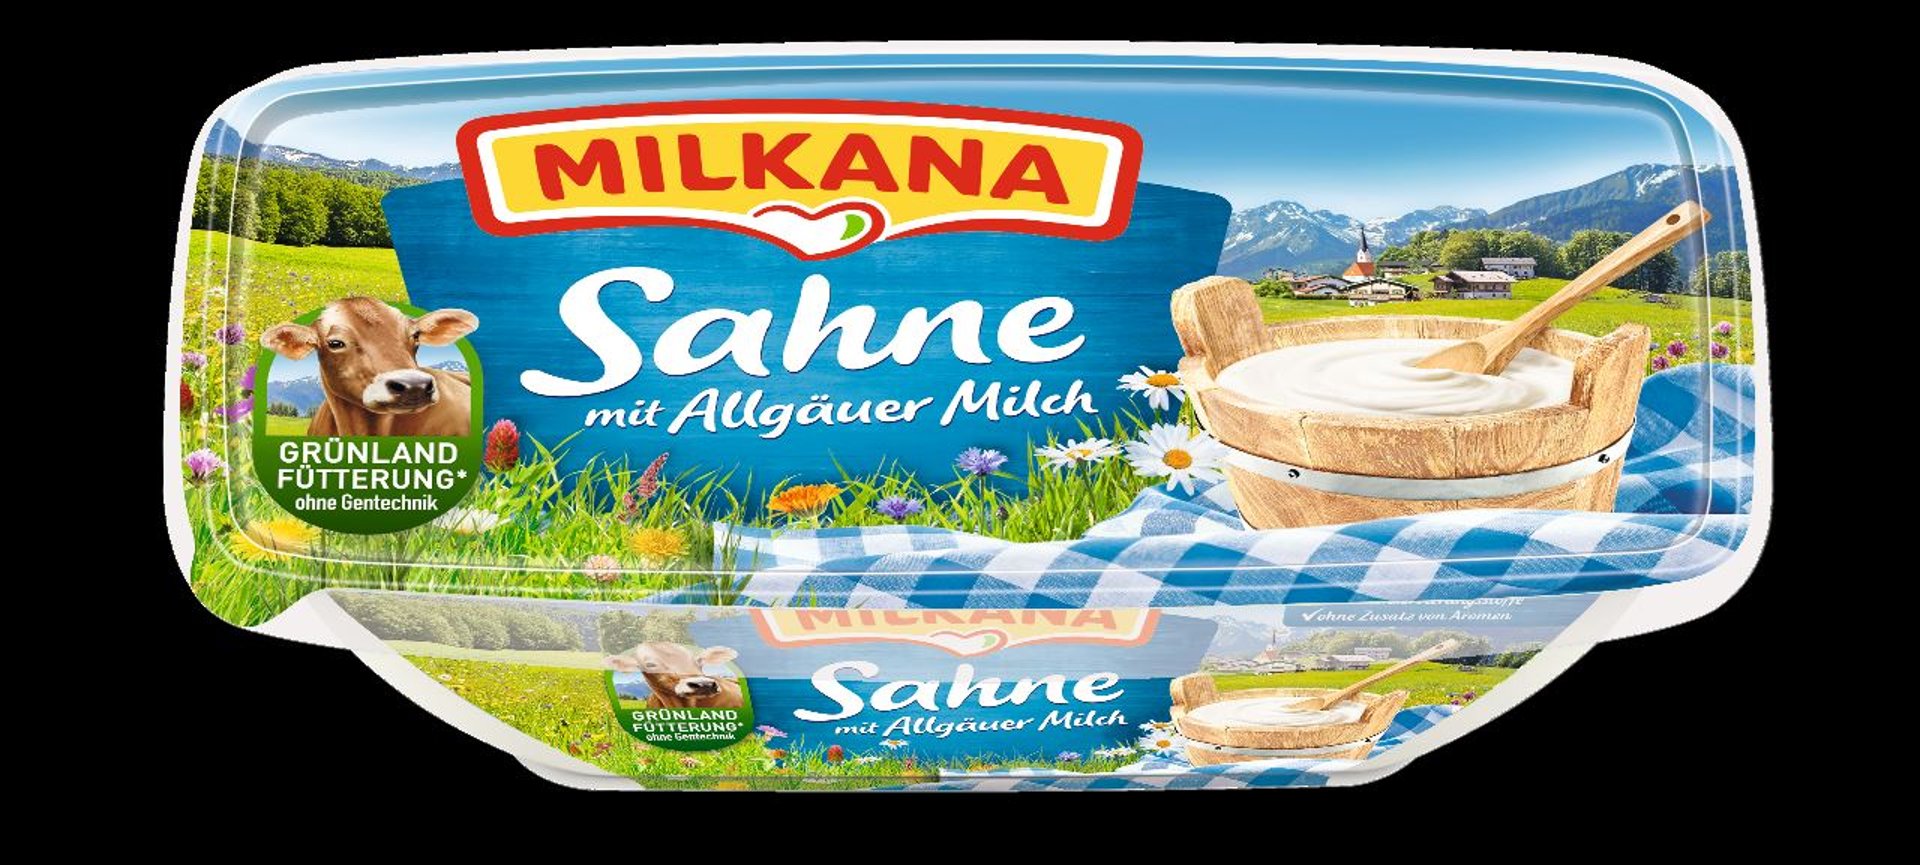 Milkana - Frischeschale Sahne 50% - 190 g Tiegel